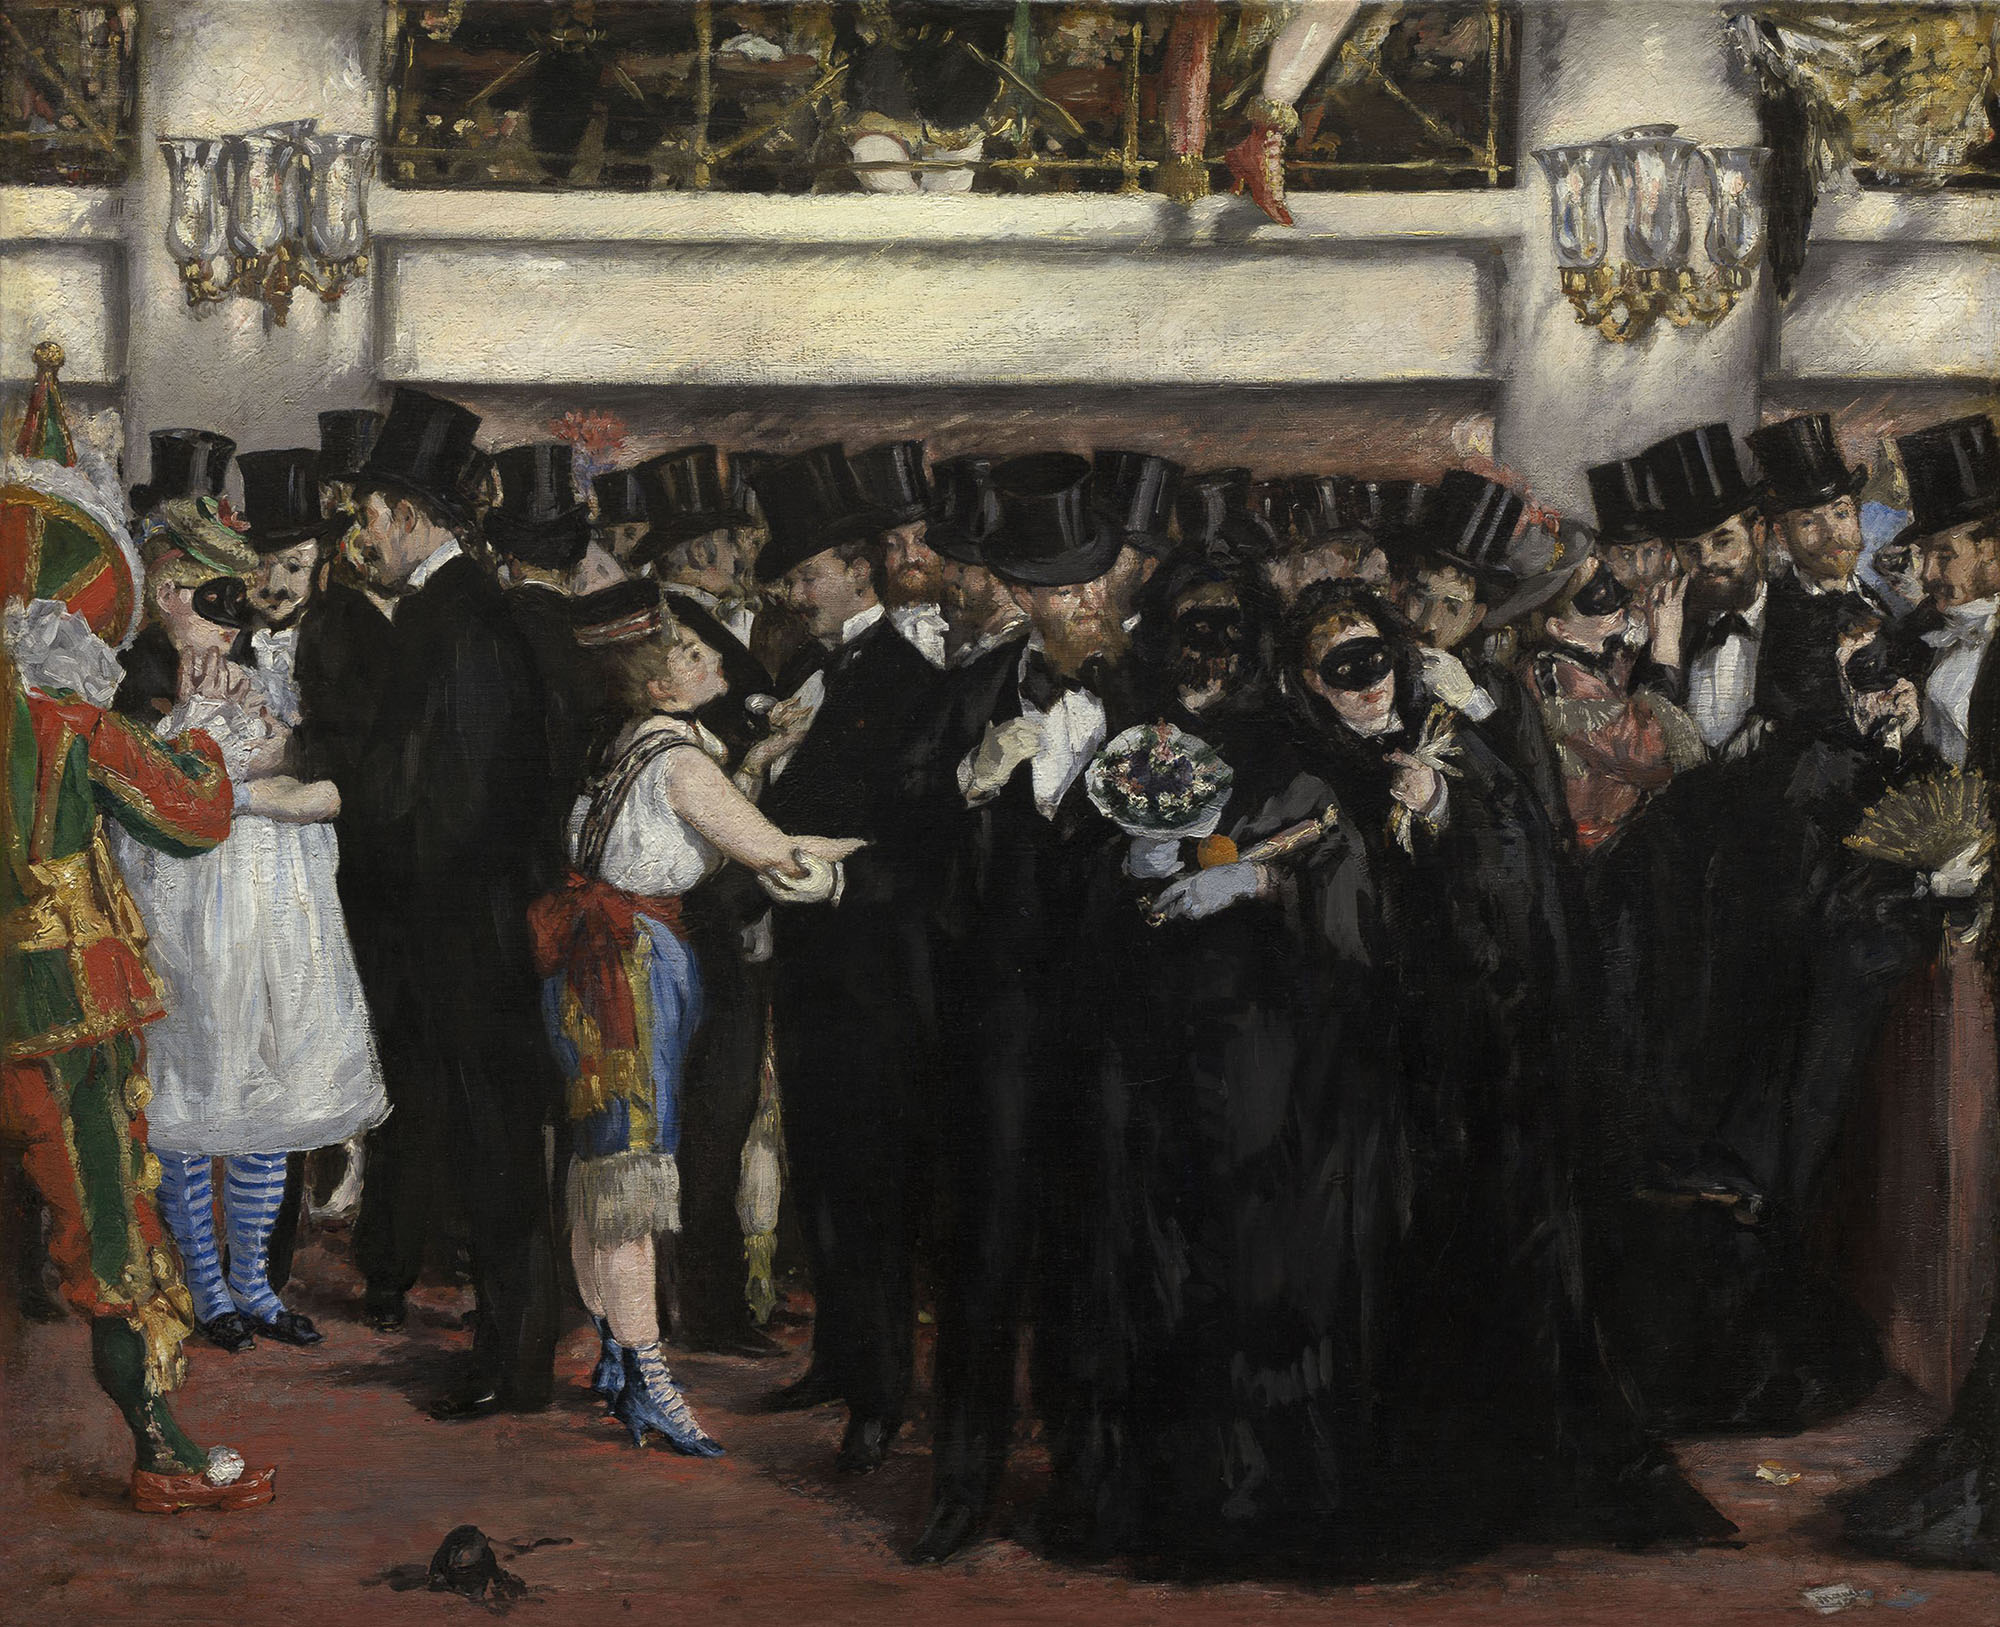 Эдуард Мане. "Бал-маскарад в Опере". 1873. Национальная галерея искусств, Вашингтон.